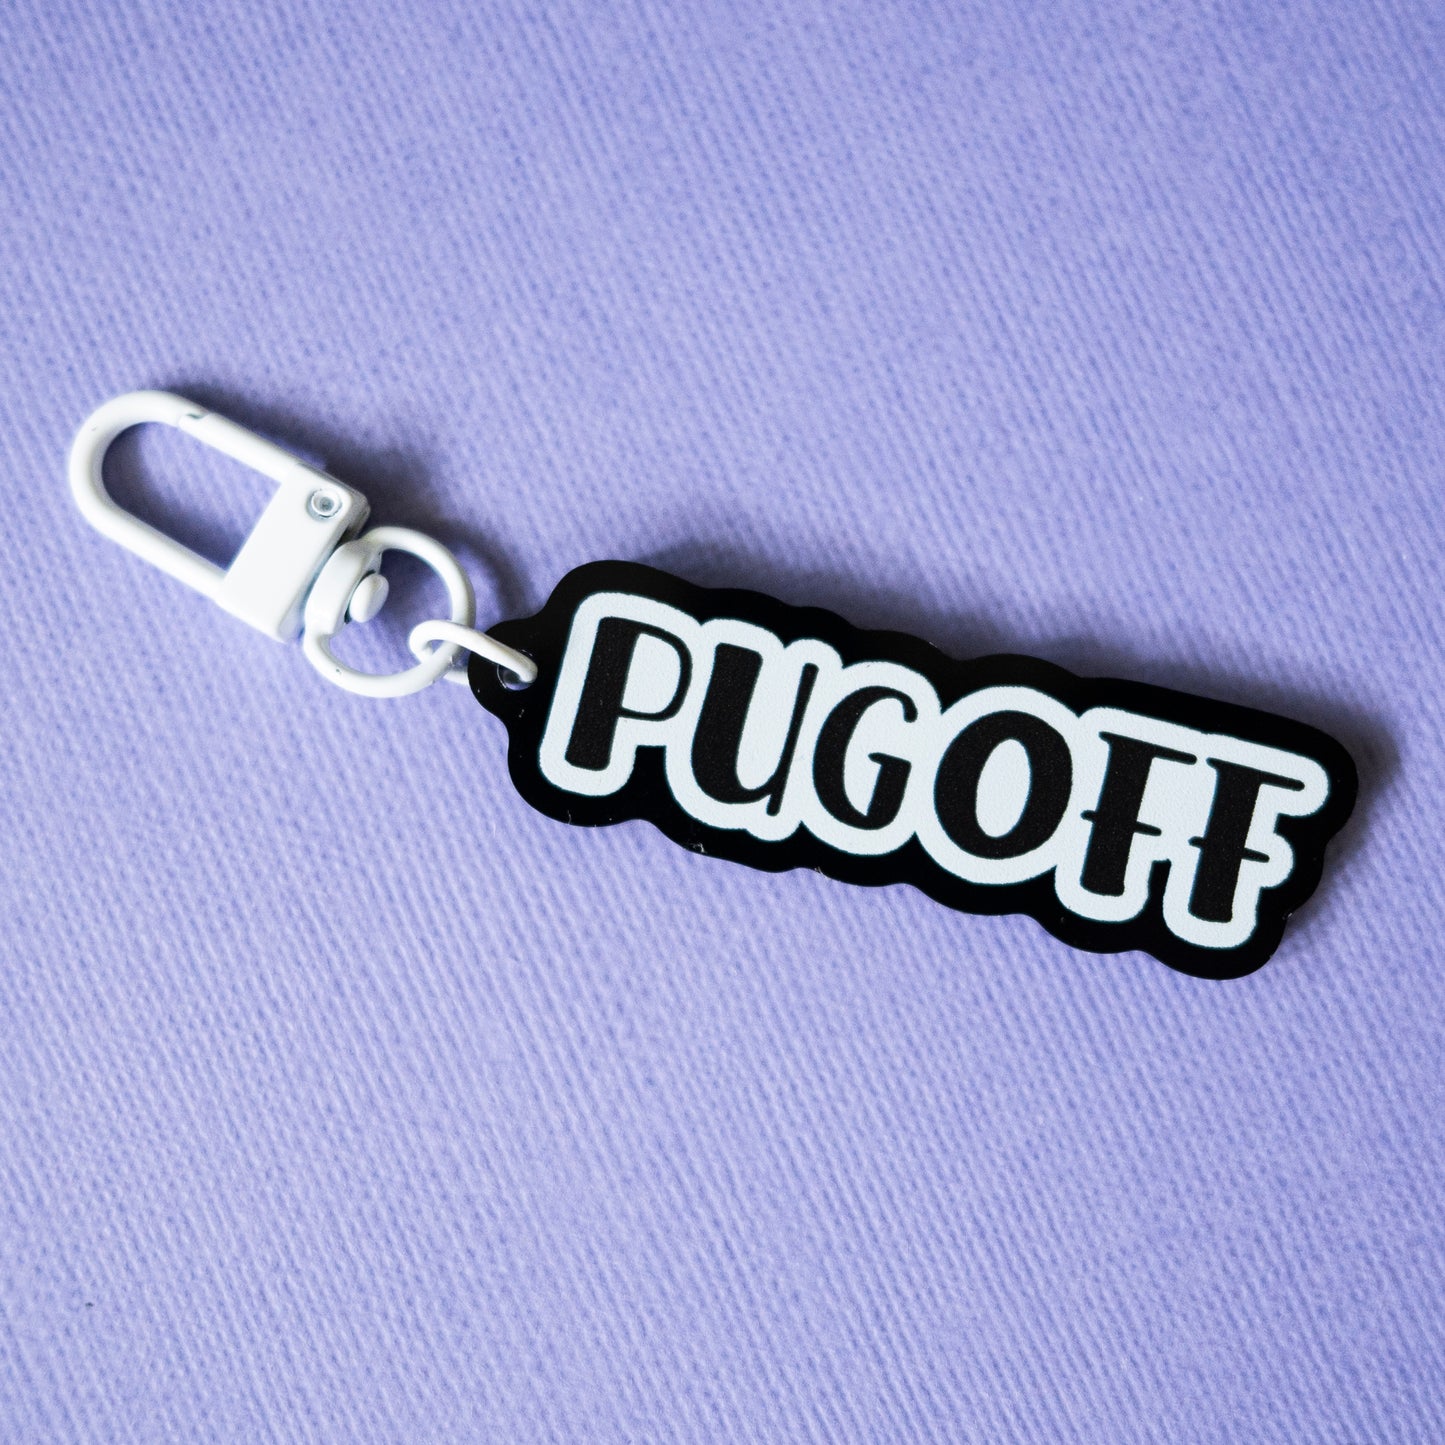 Pug Off Keychain - Black & White